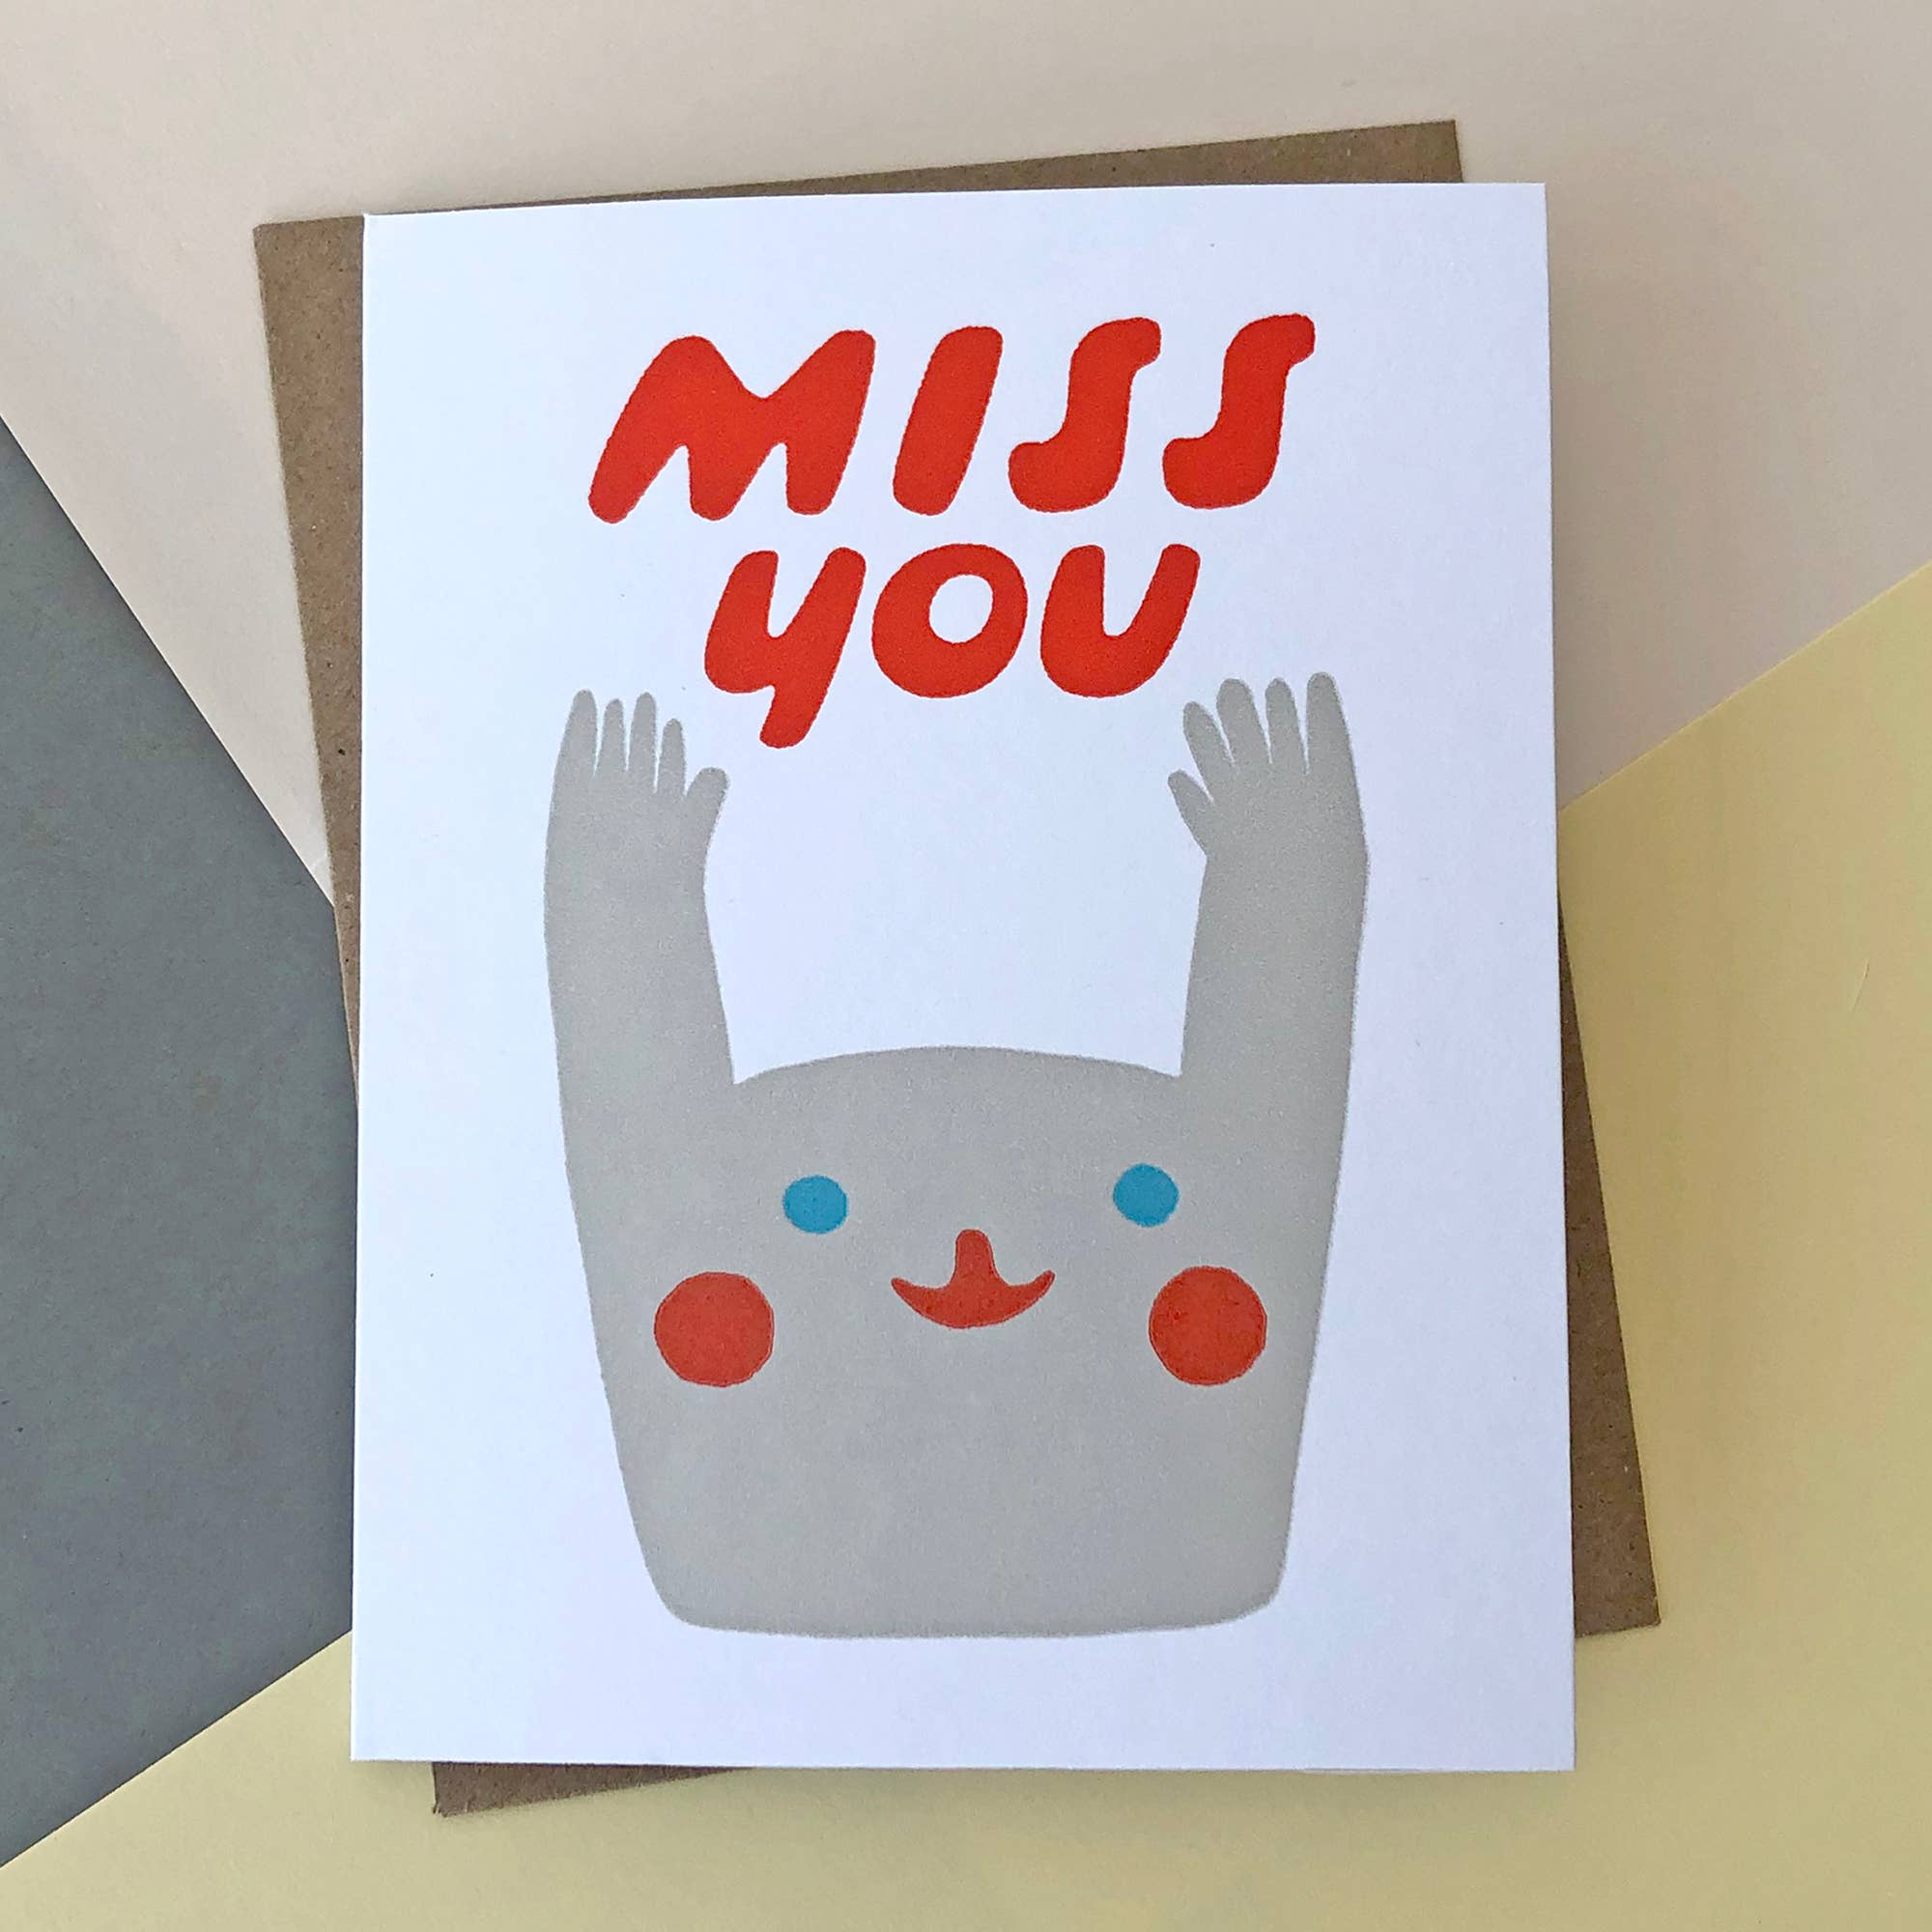 Miss You Letterpress Card -love